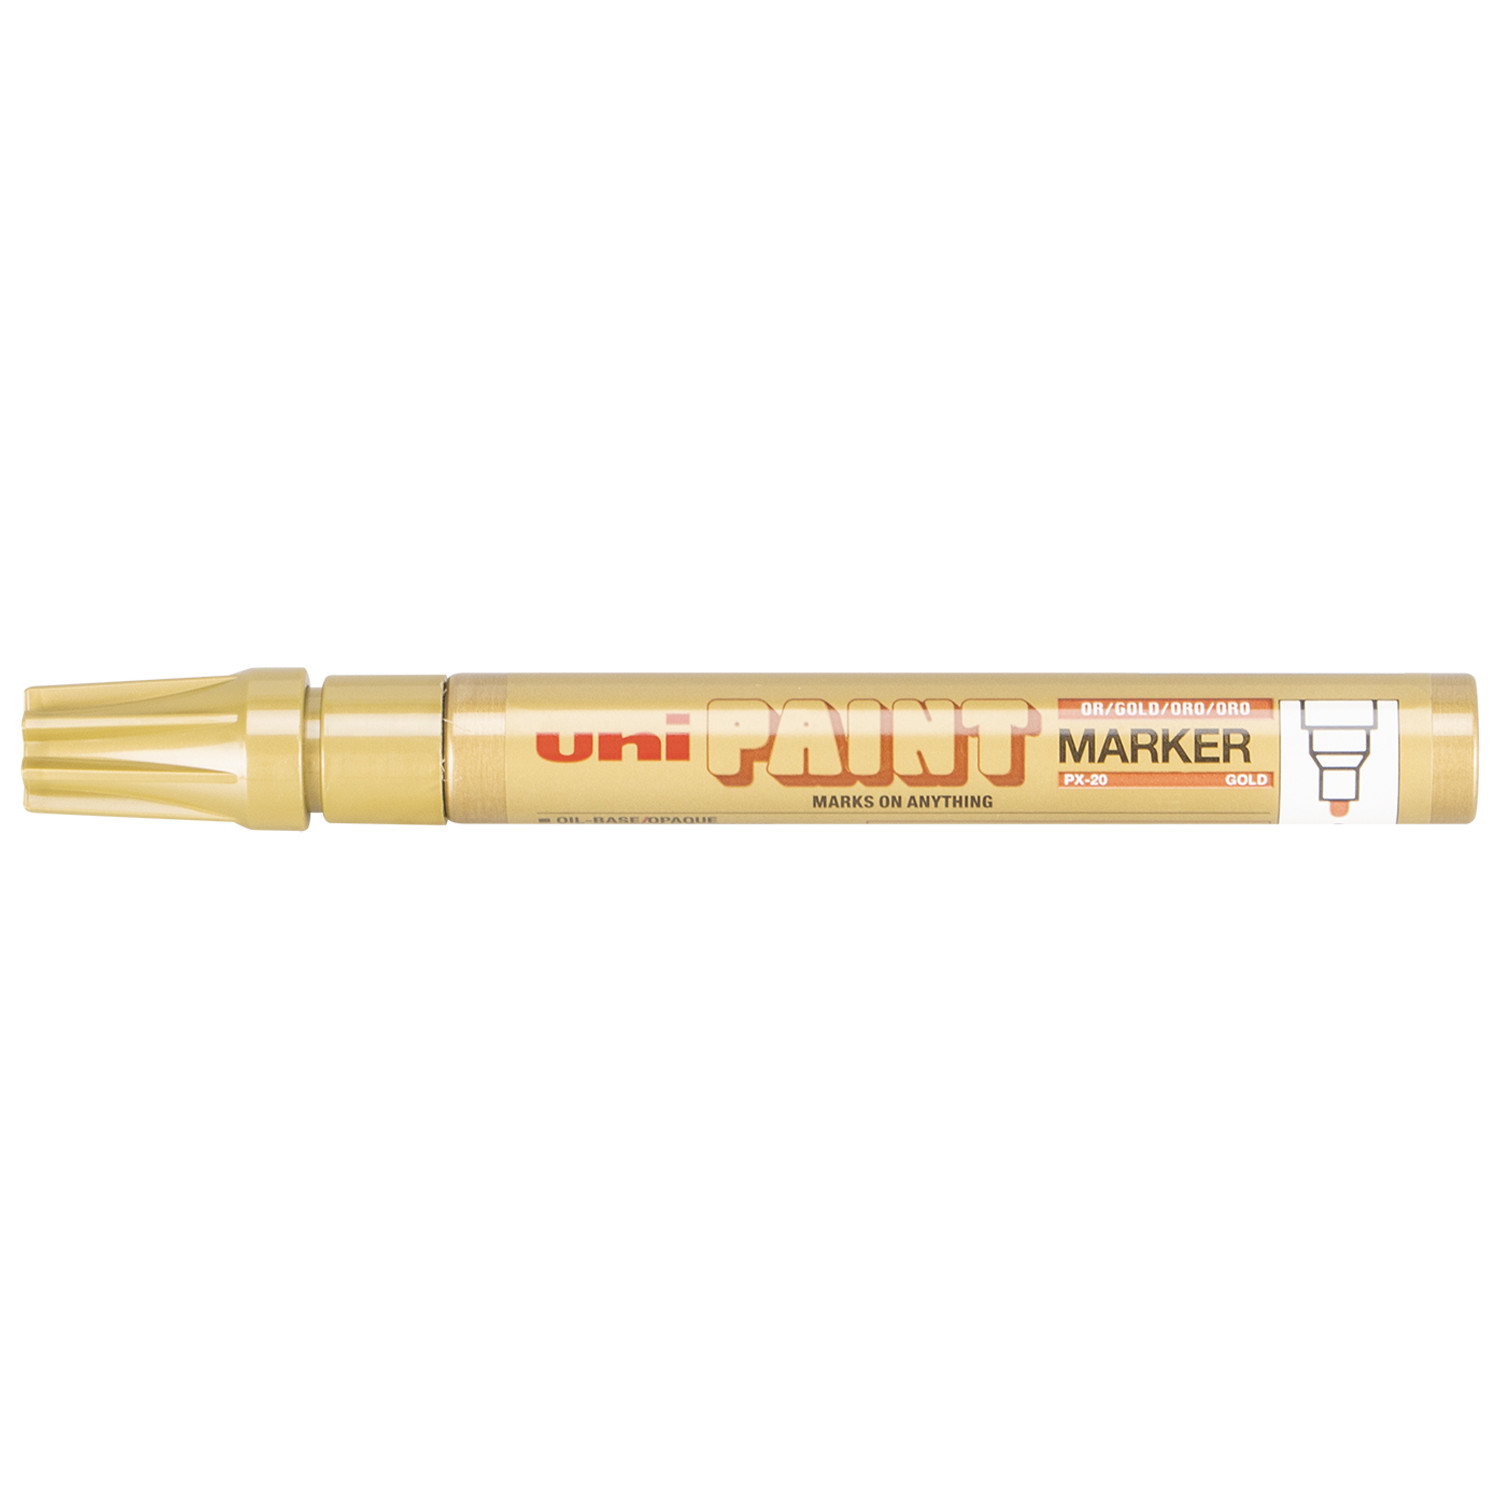 Uniball UniPaint Paint Marker Pen PX-20 Gold - Gold Image 1